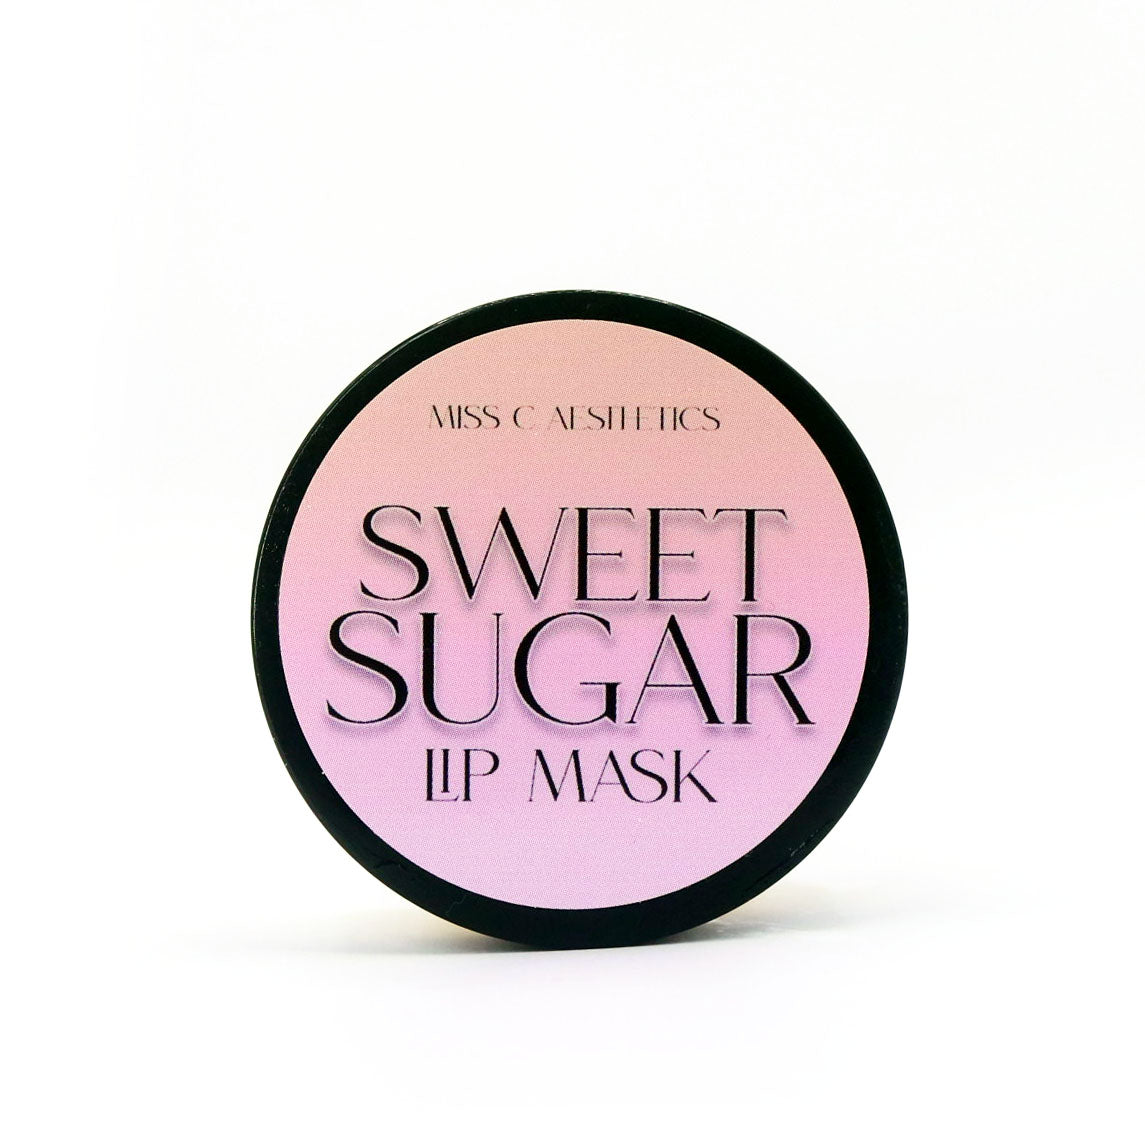 "Sweet Sugar" Lip Mask